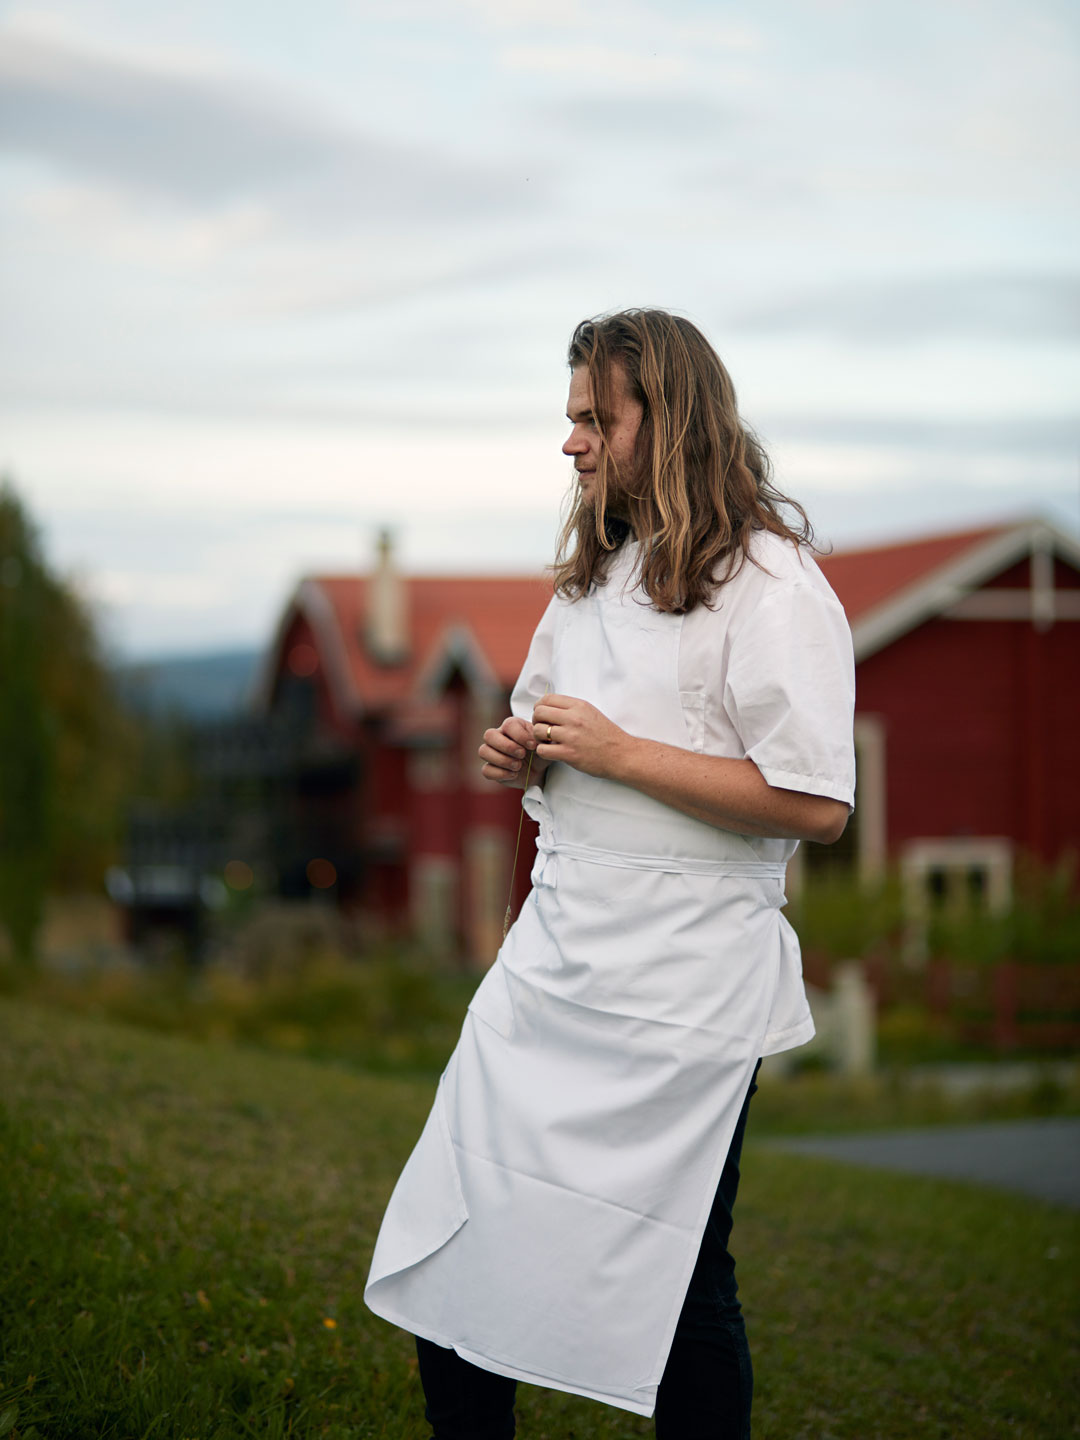 Chef and author Magnus Nilsson. Photo by Erik Olsson